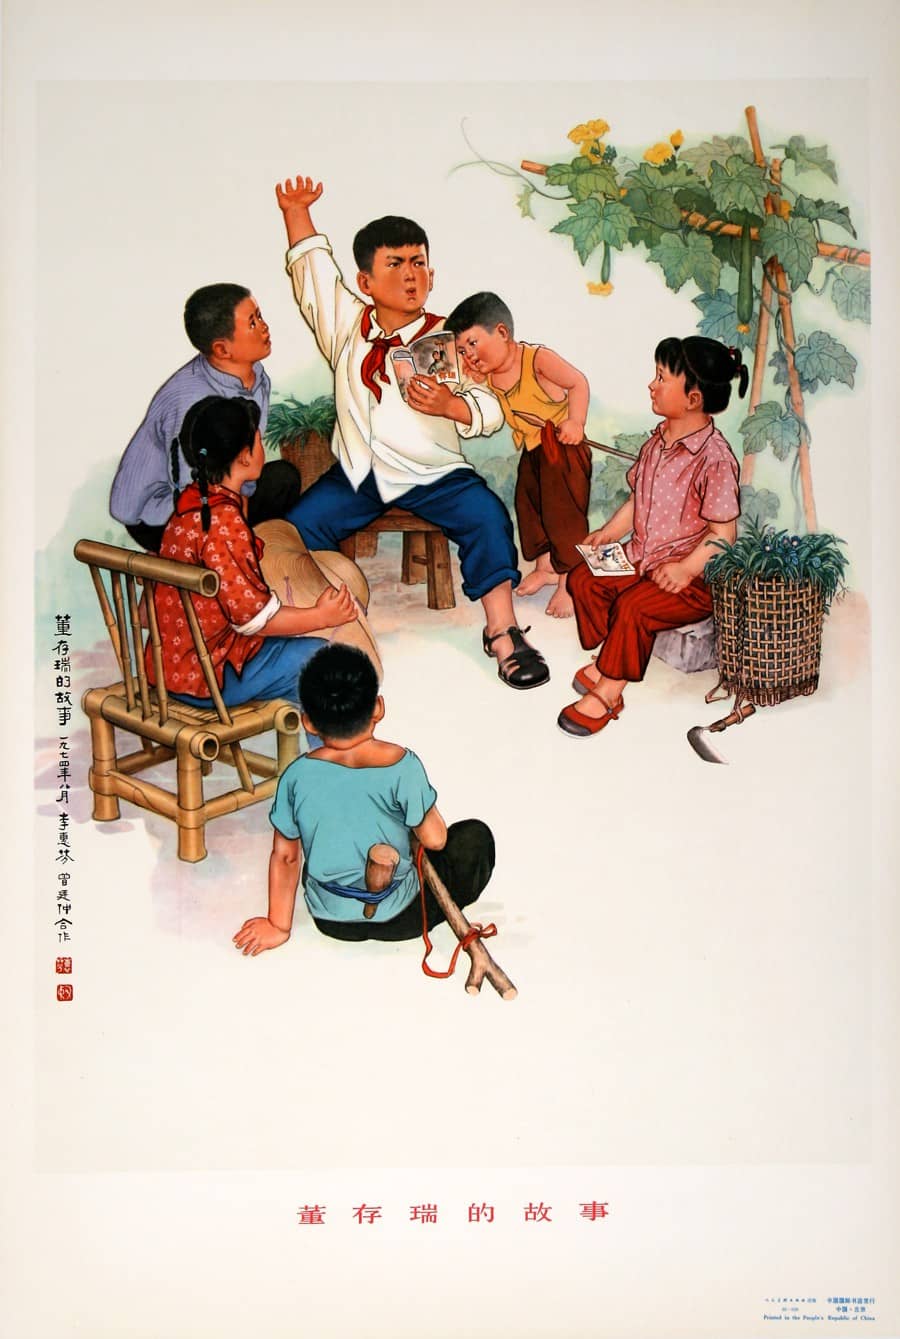 Original Vintage Chinese Cultural Revolution Poster c1974 - 6 Children